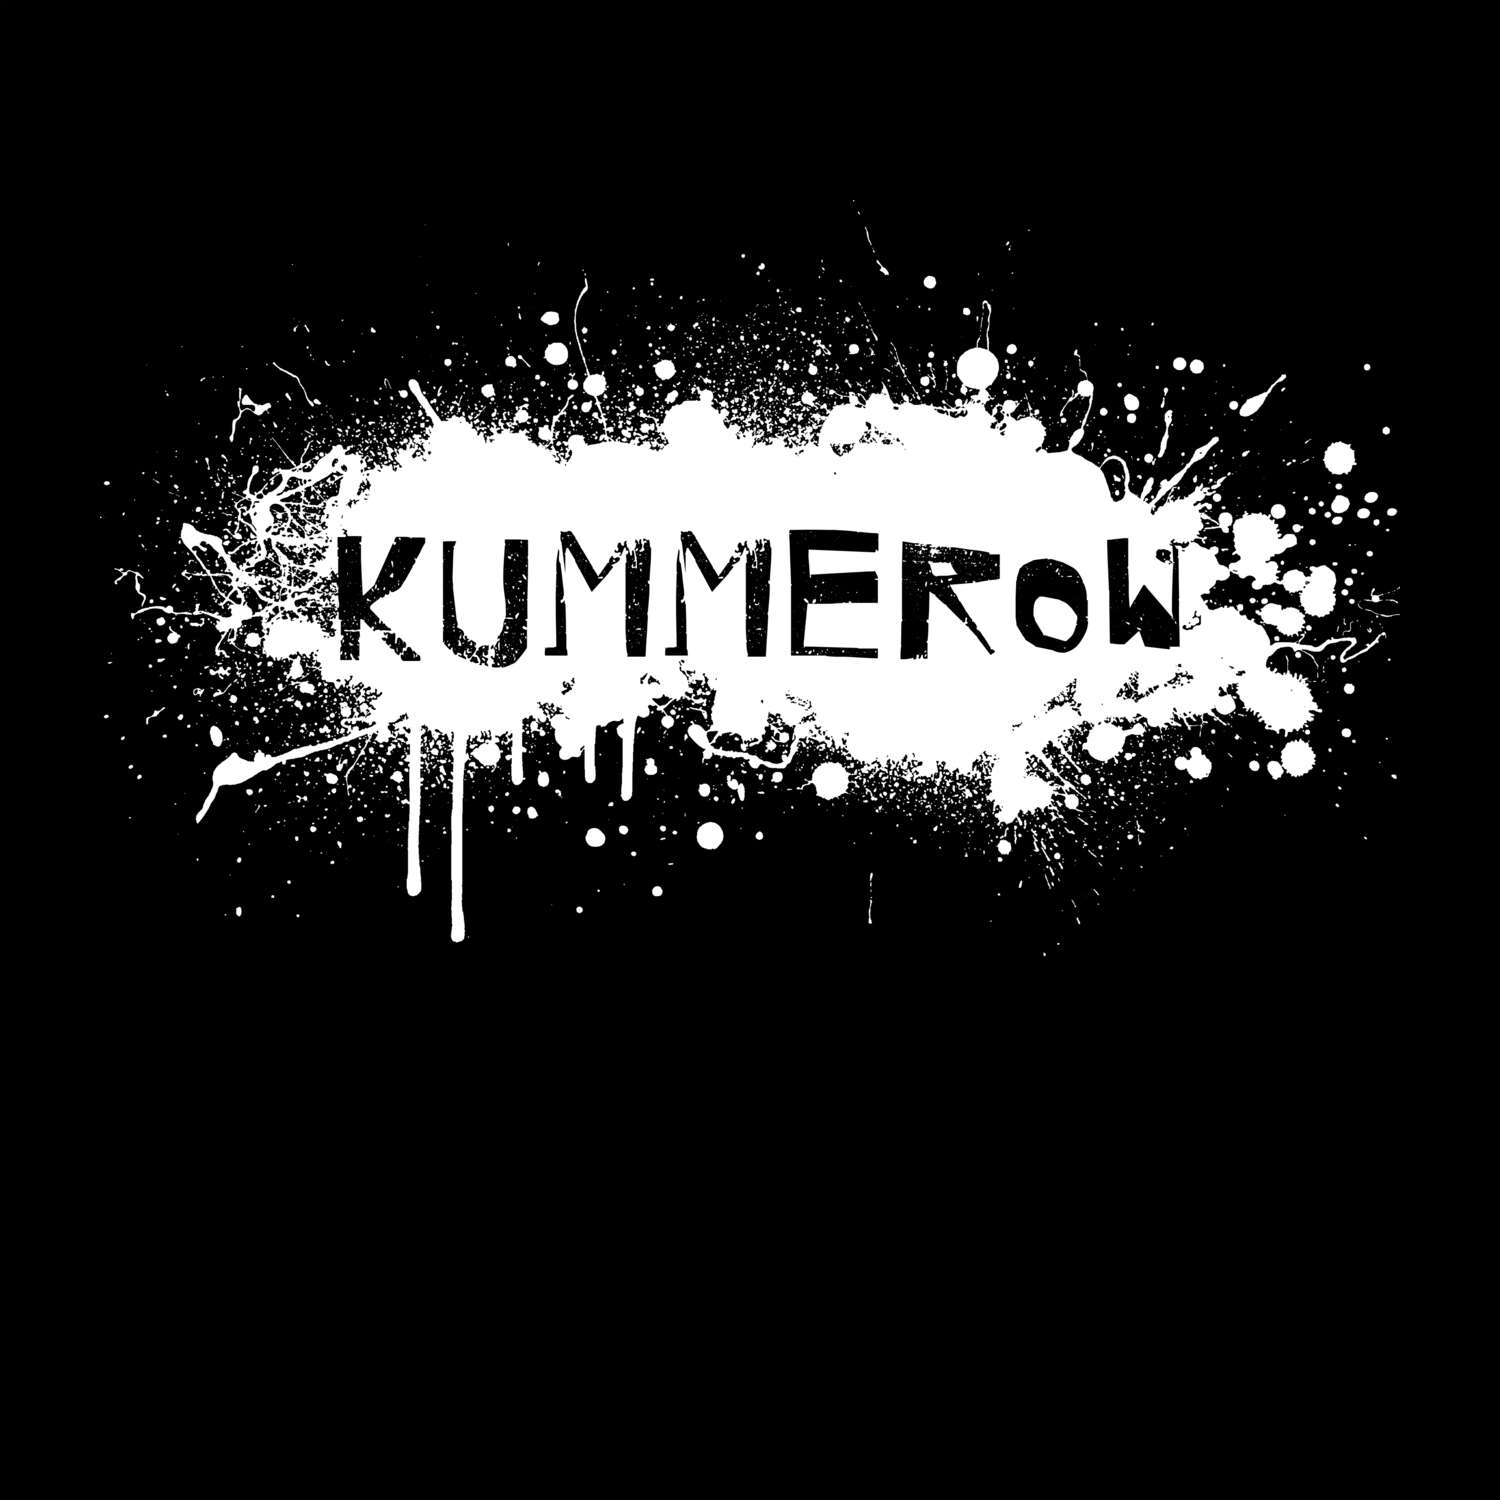 Kummerow T-Shirt »Paint Splash Punk«